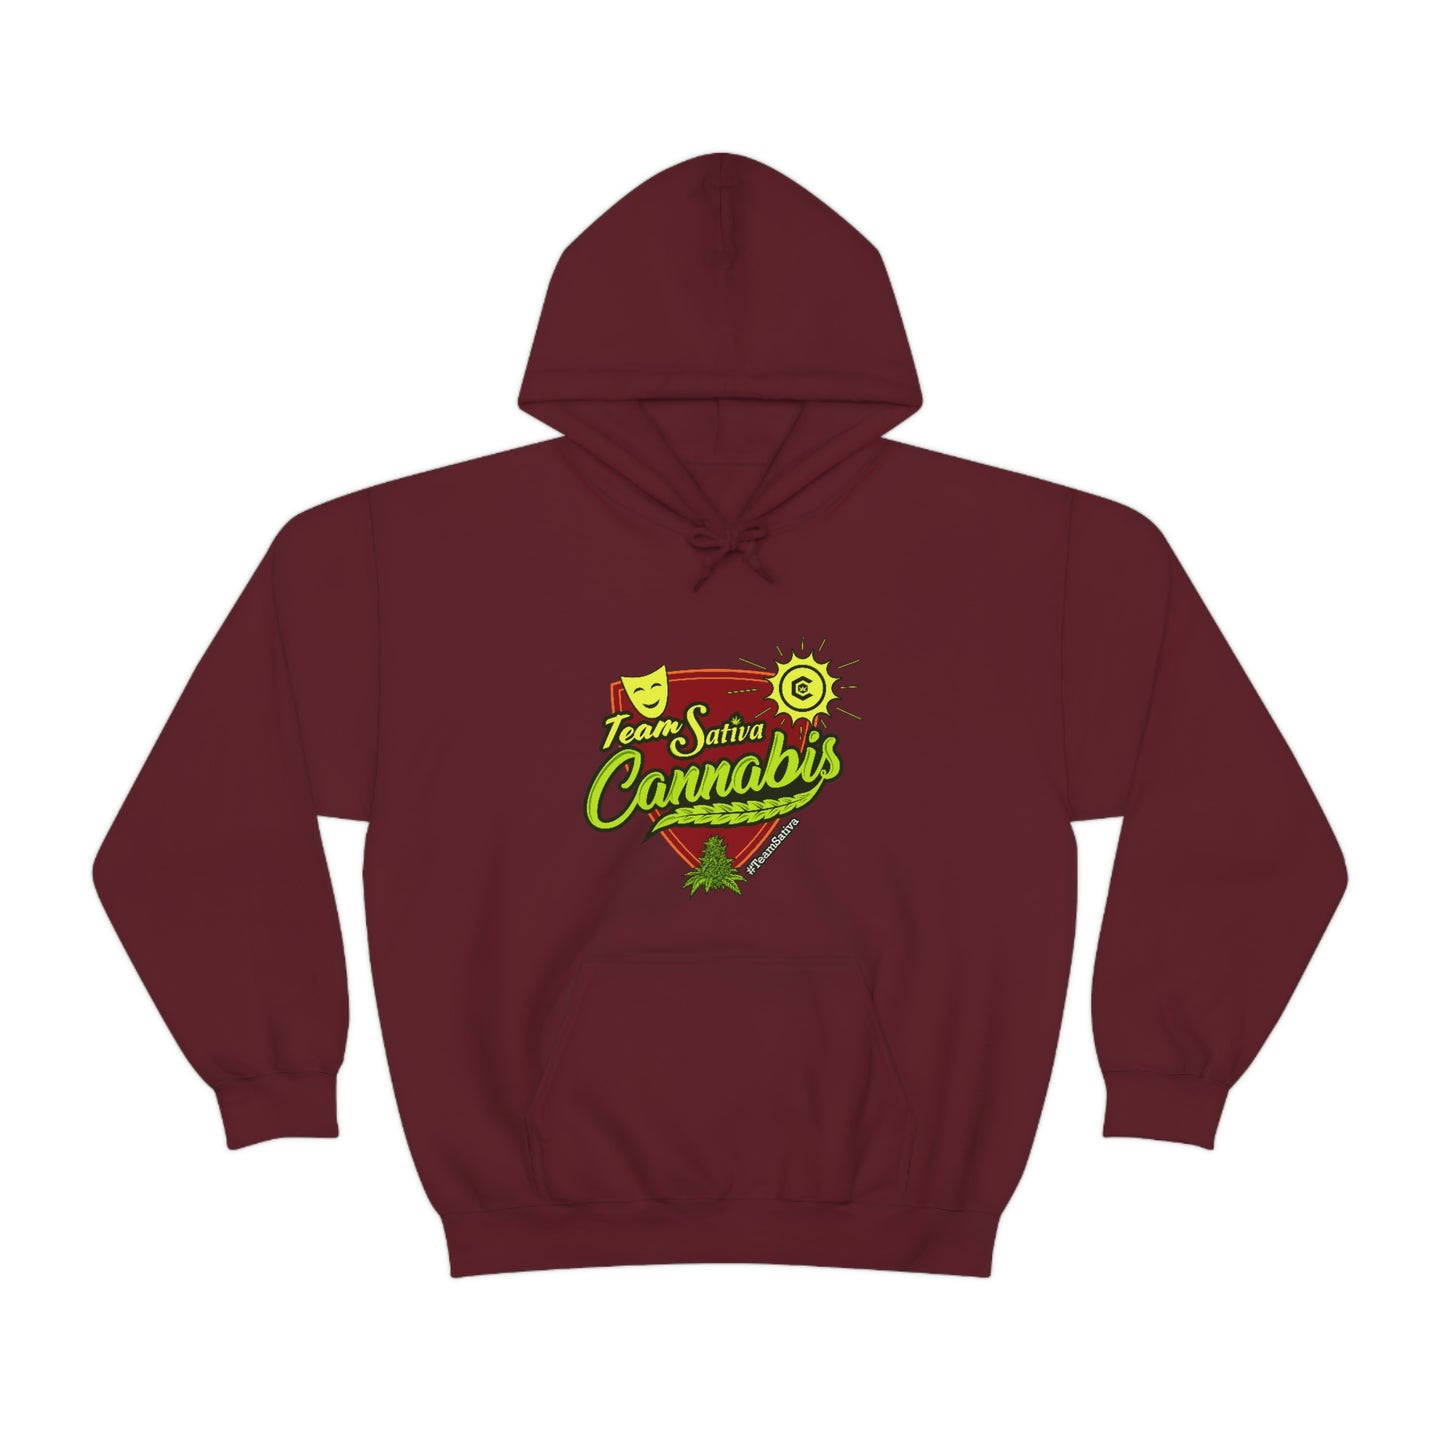 a maroon hoodie with the word "Team Sativa Stoner Sweatshirt" on it.